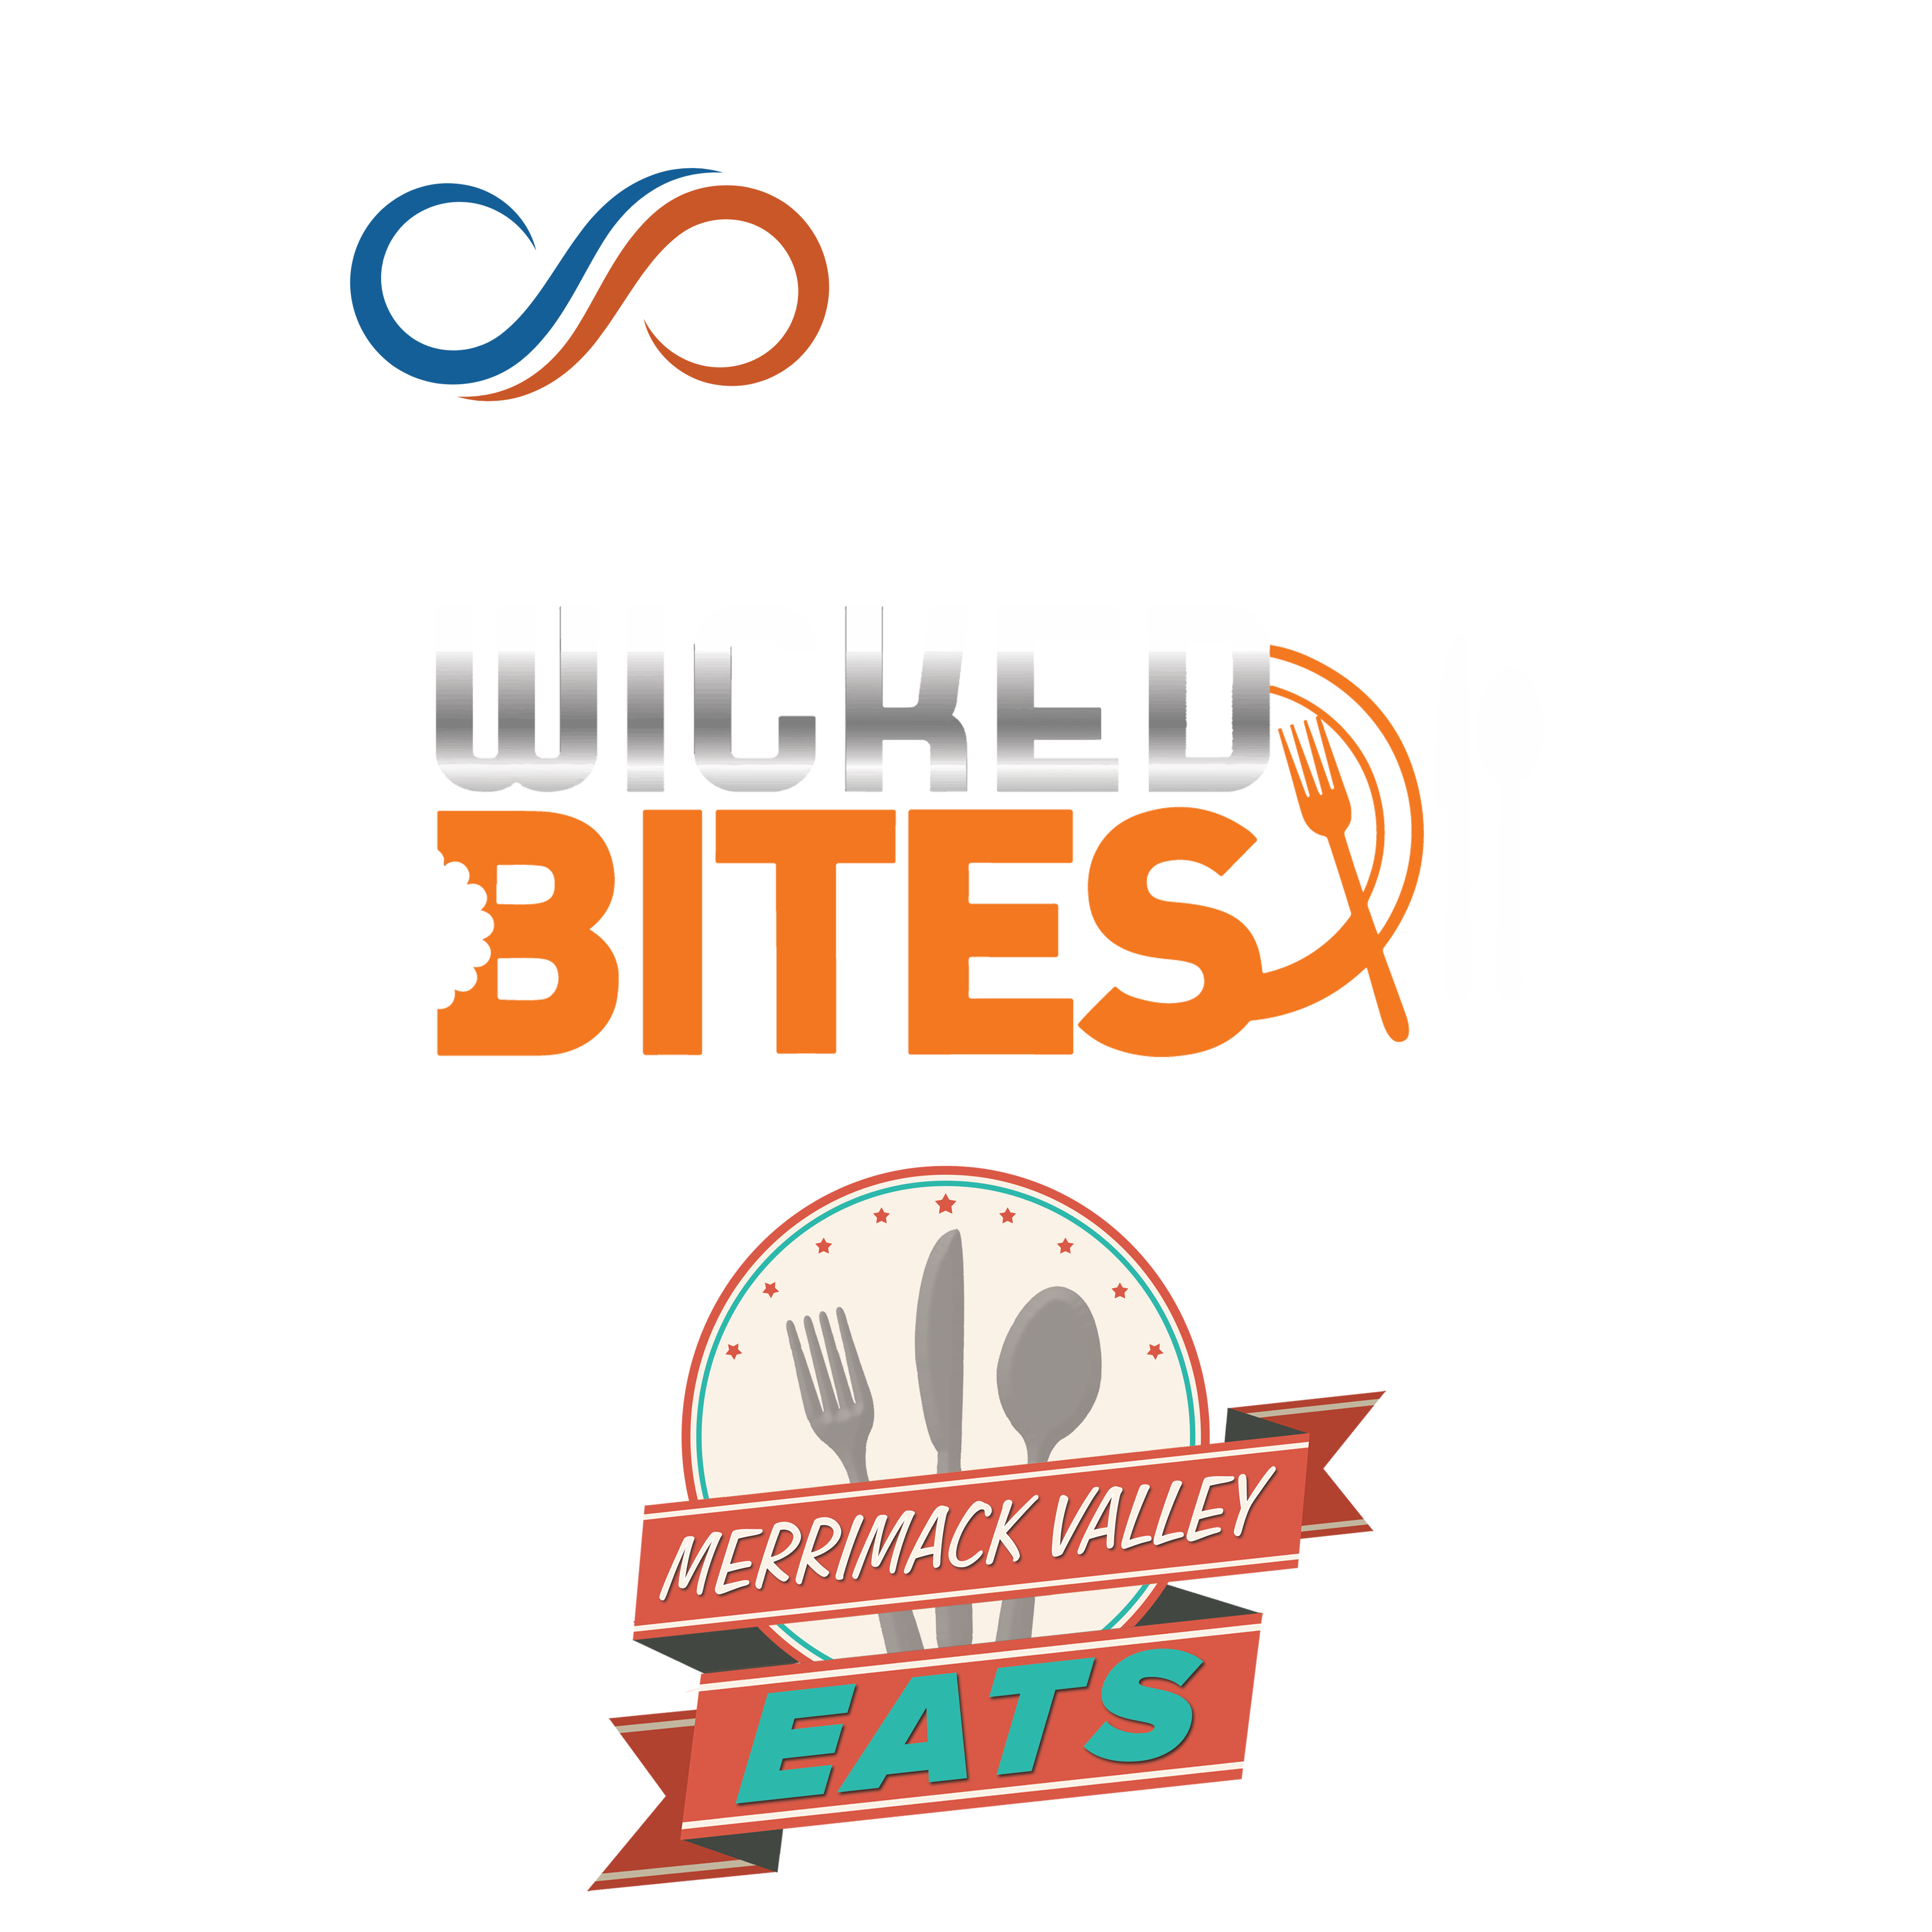 Wicked-Bites-and-Merrimack-Valley-Eats-logos1